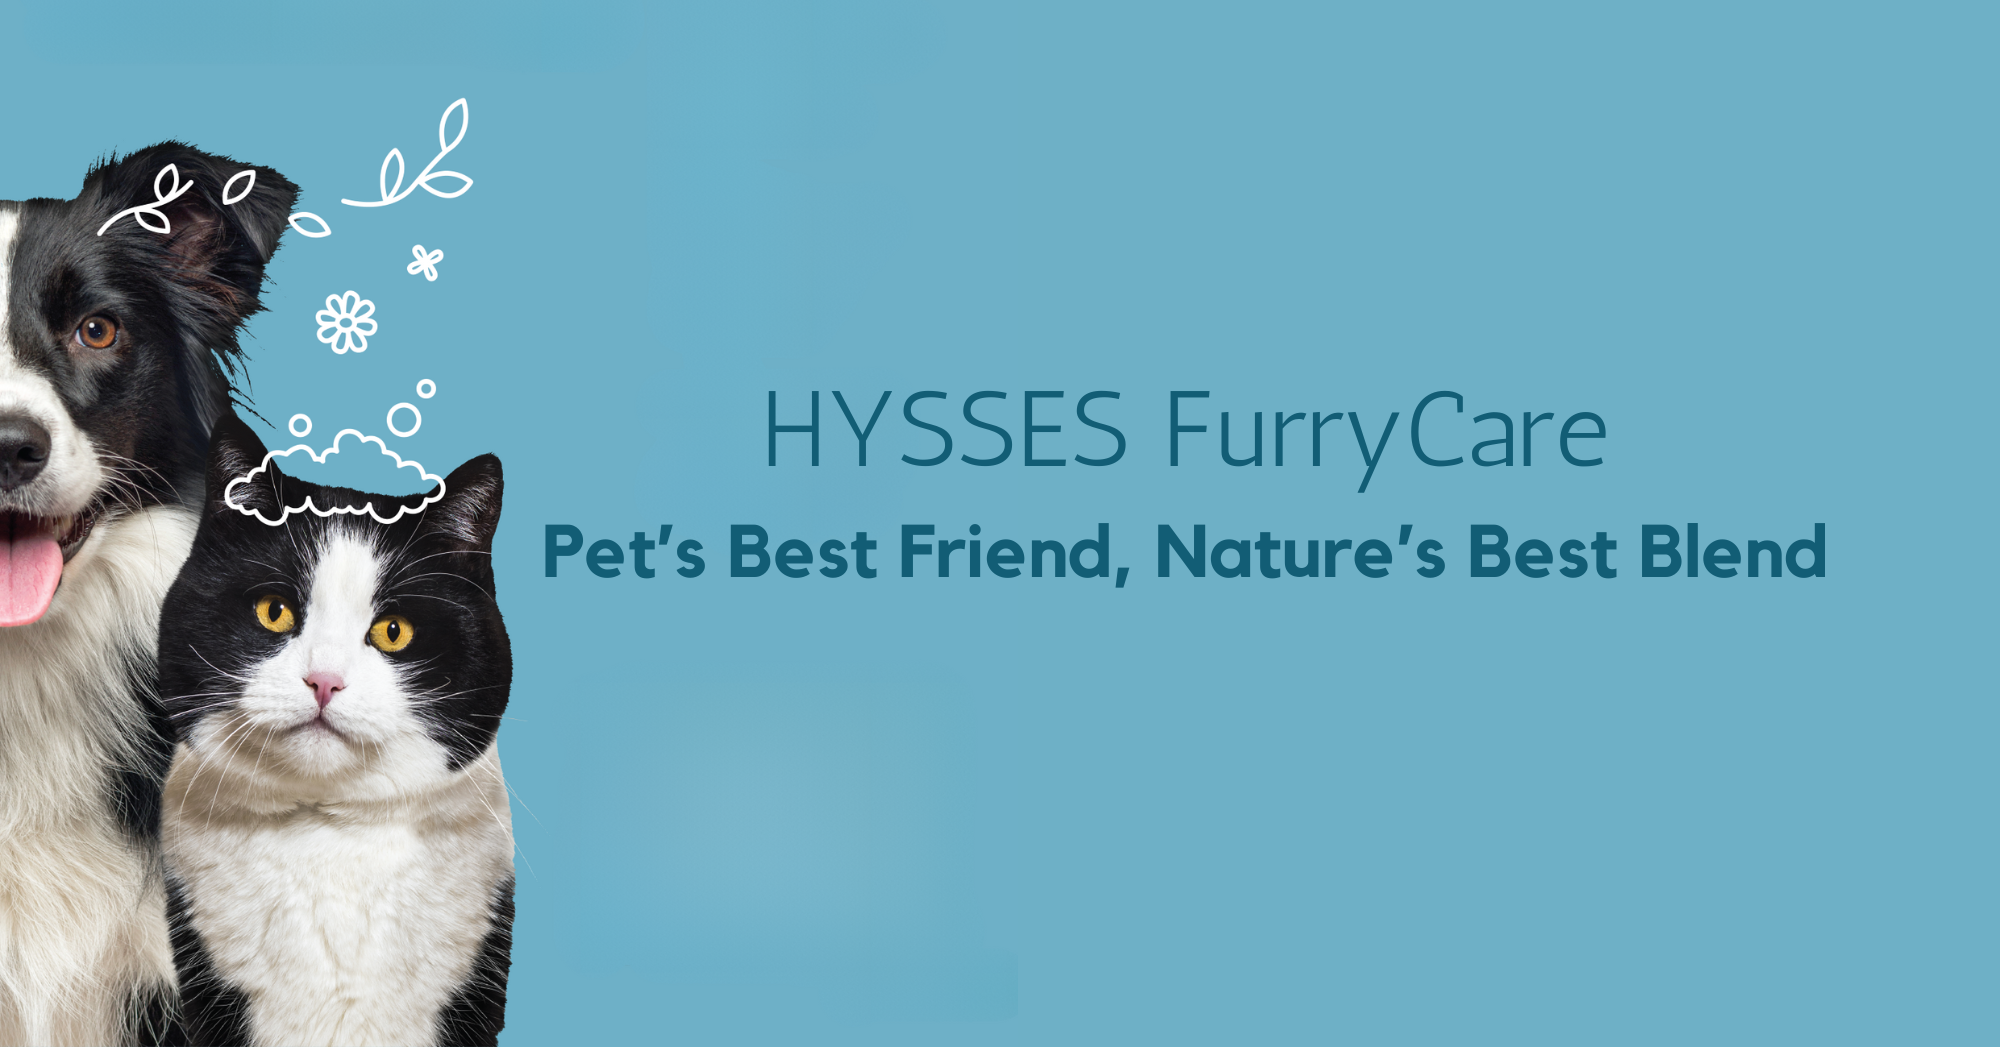 Press Release - Hysses FurryCare: Pet's Best Friend, Nature's Best Blend